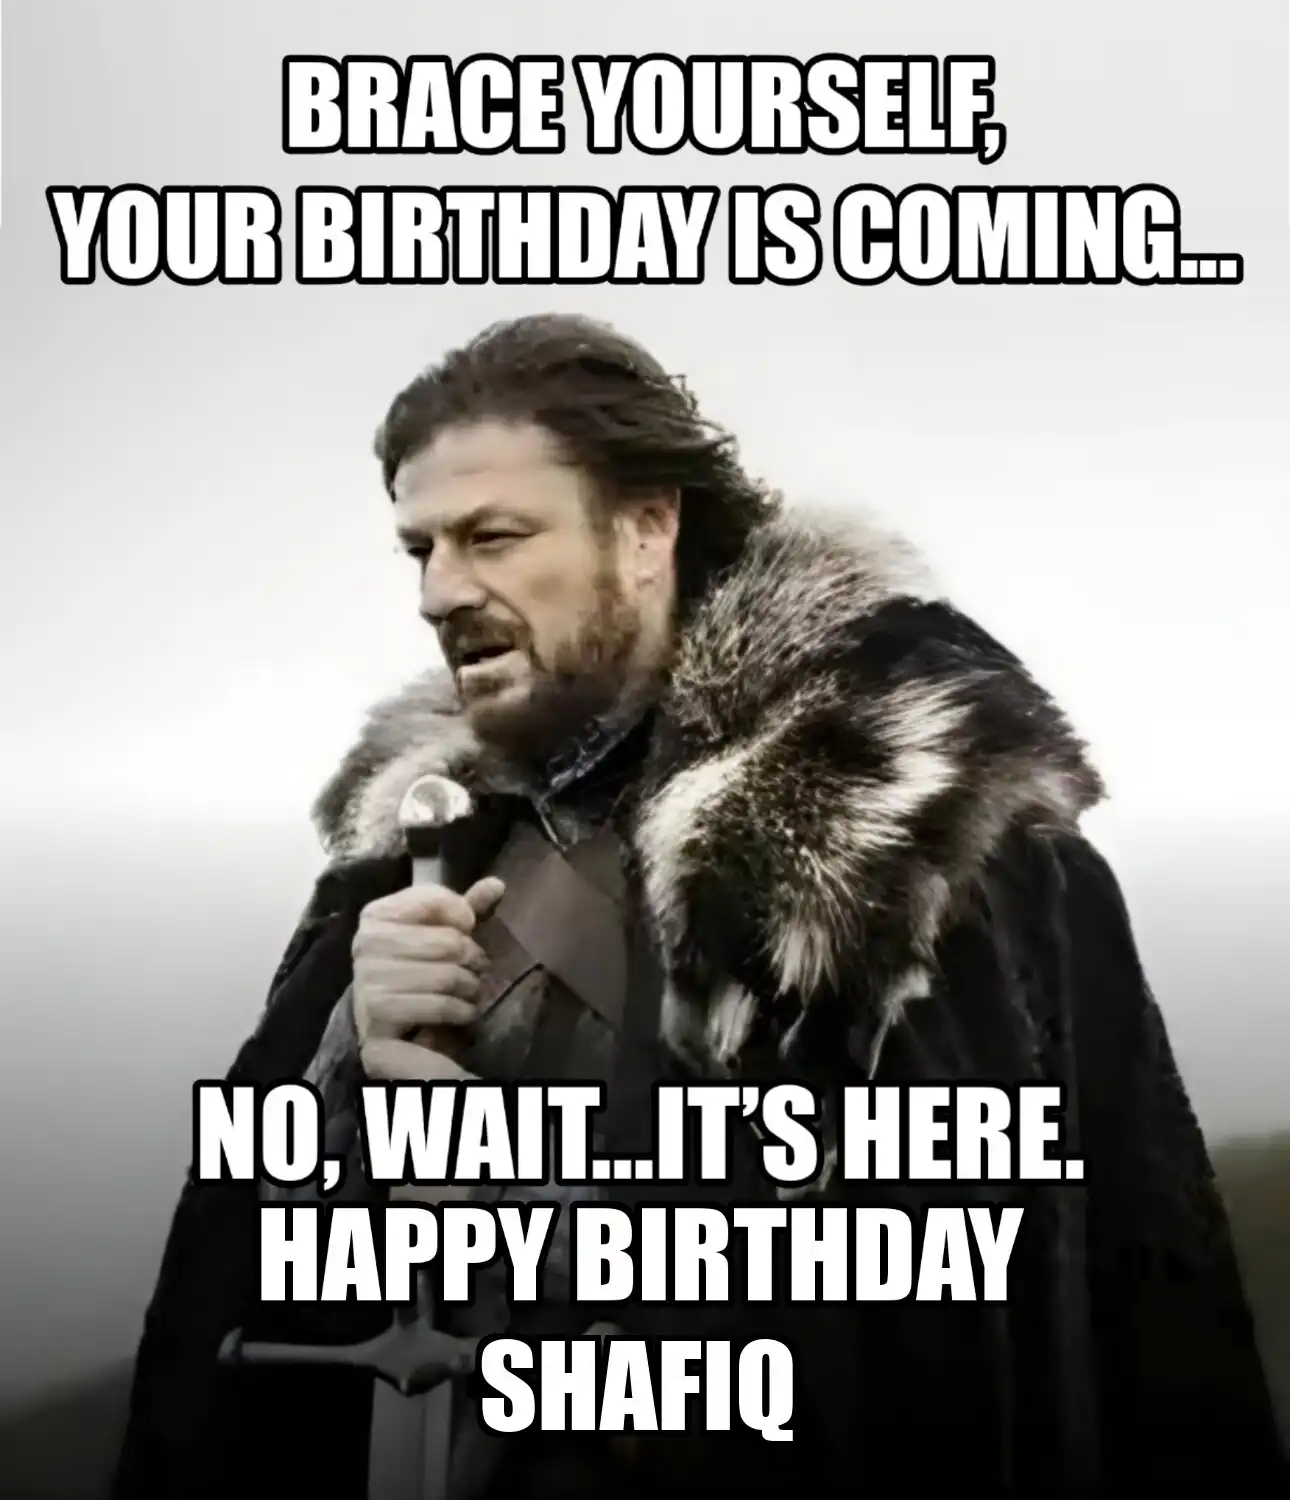 Happy Birthday Shafiq Brace Yourself Your Birthday Is Coming Meme